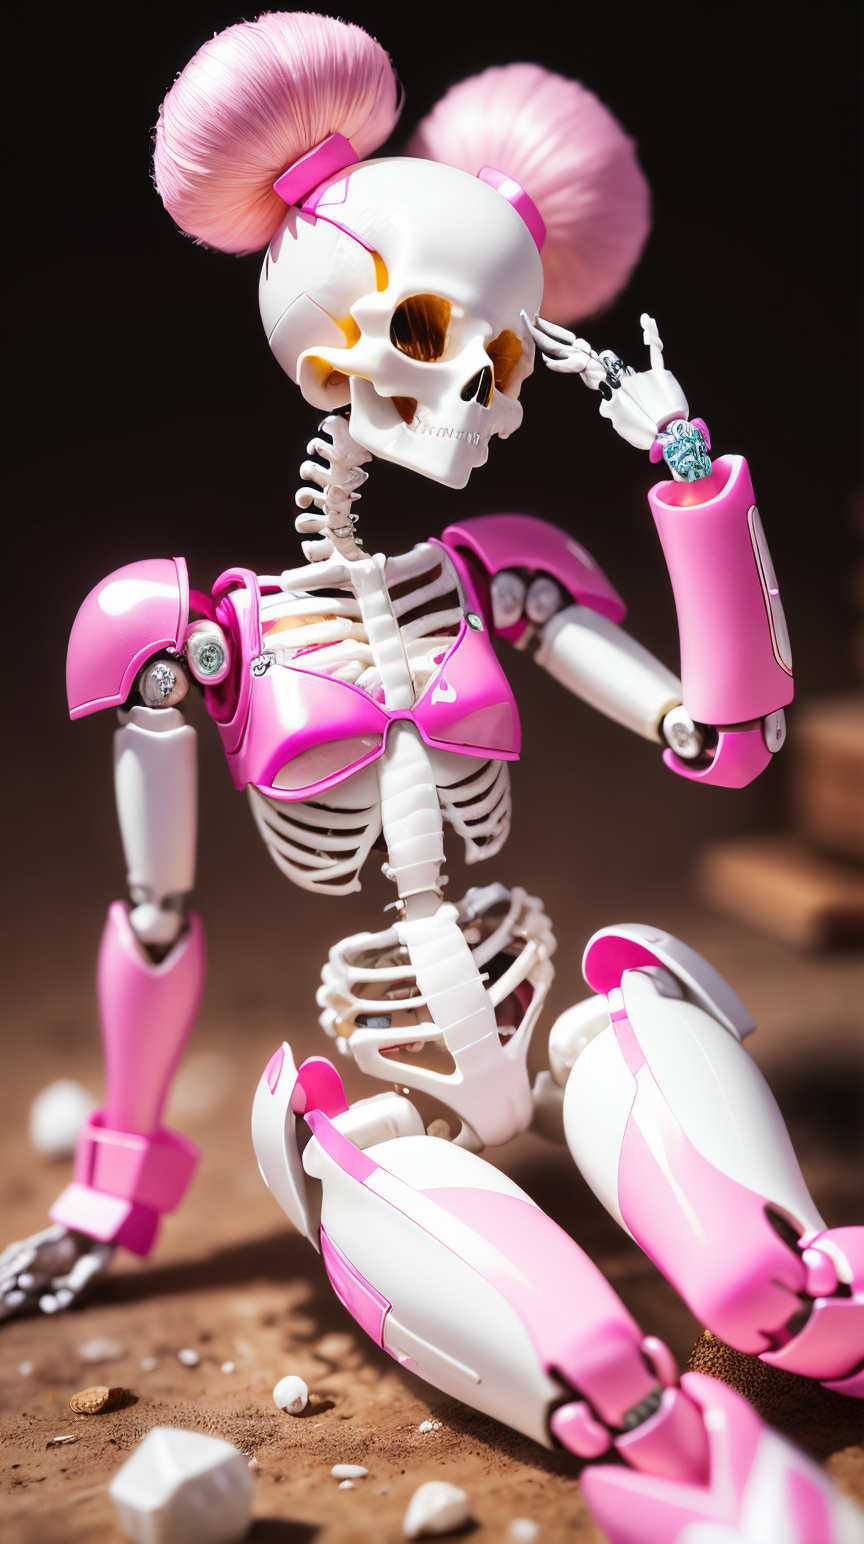 <lora:BarbieCore:0.8> BarbieCore skeleton, (shiny plastic:0.8), (pink and white:0.9), (pastel:0.85)